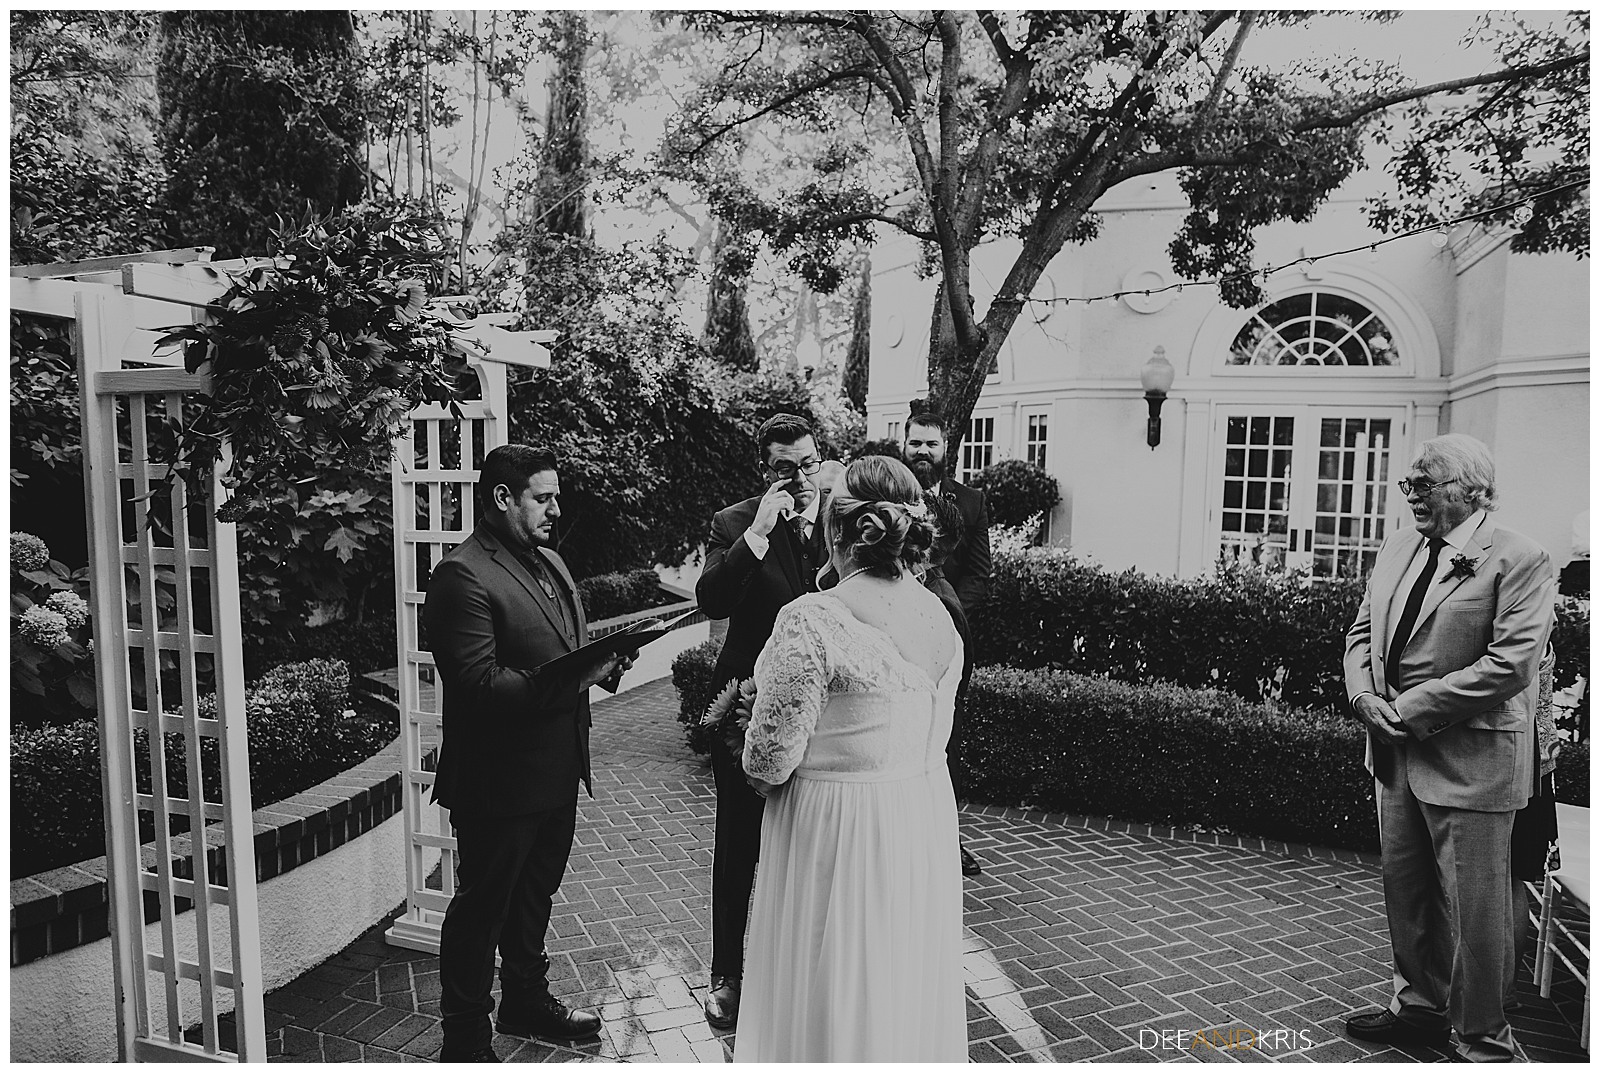 Vizcaya Wedding pictures, Sacramento Garden Venues, Dee and Kris Photography